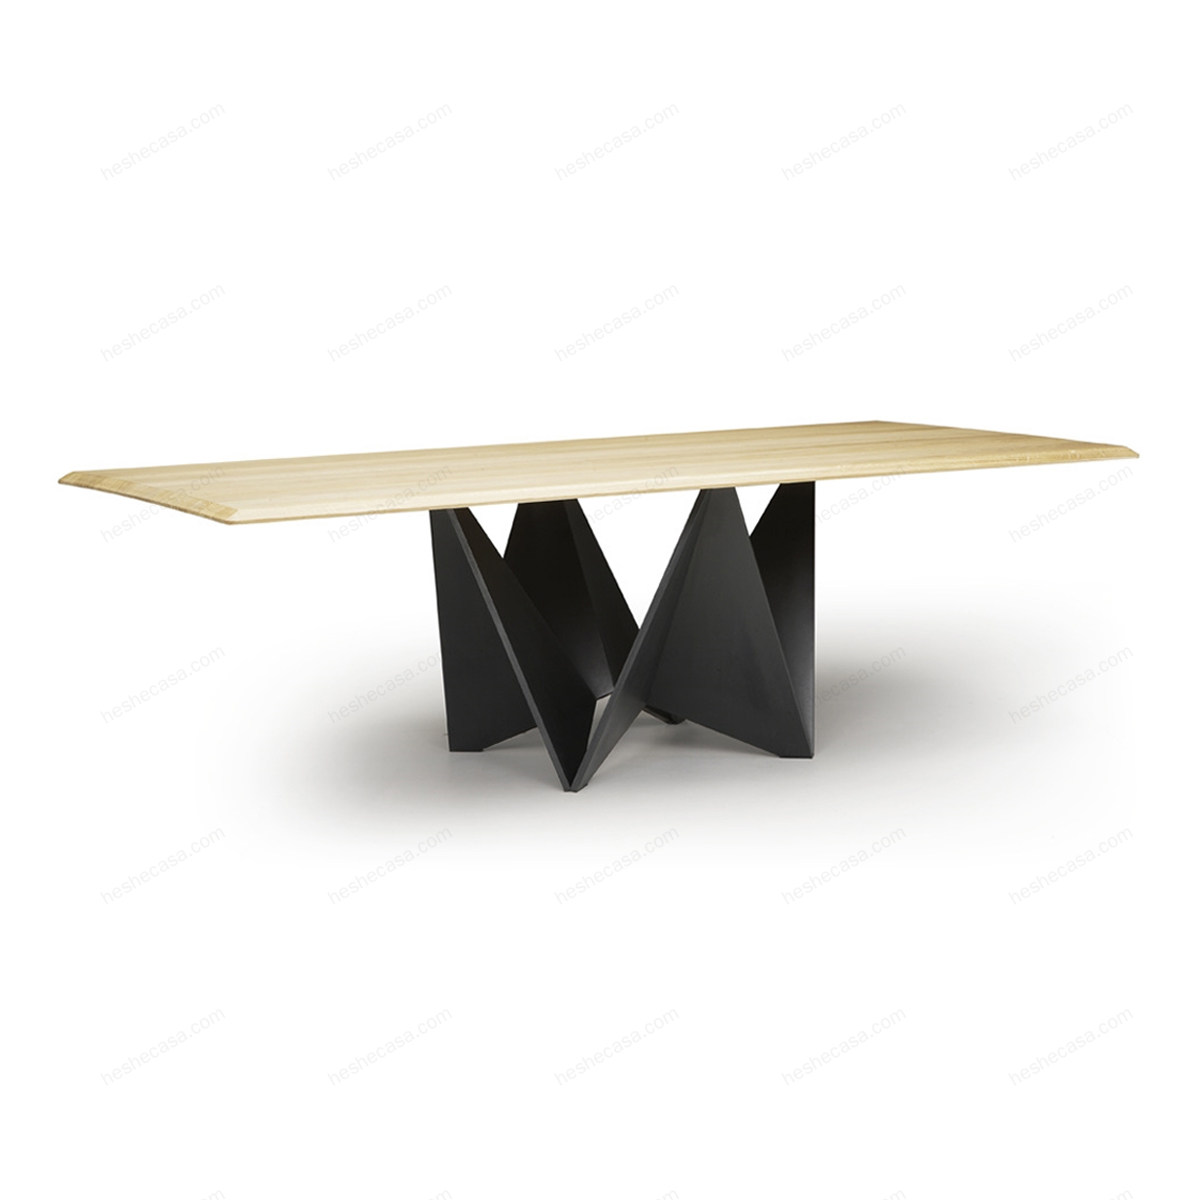 Origami - Ma餐桌